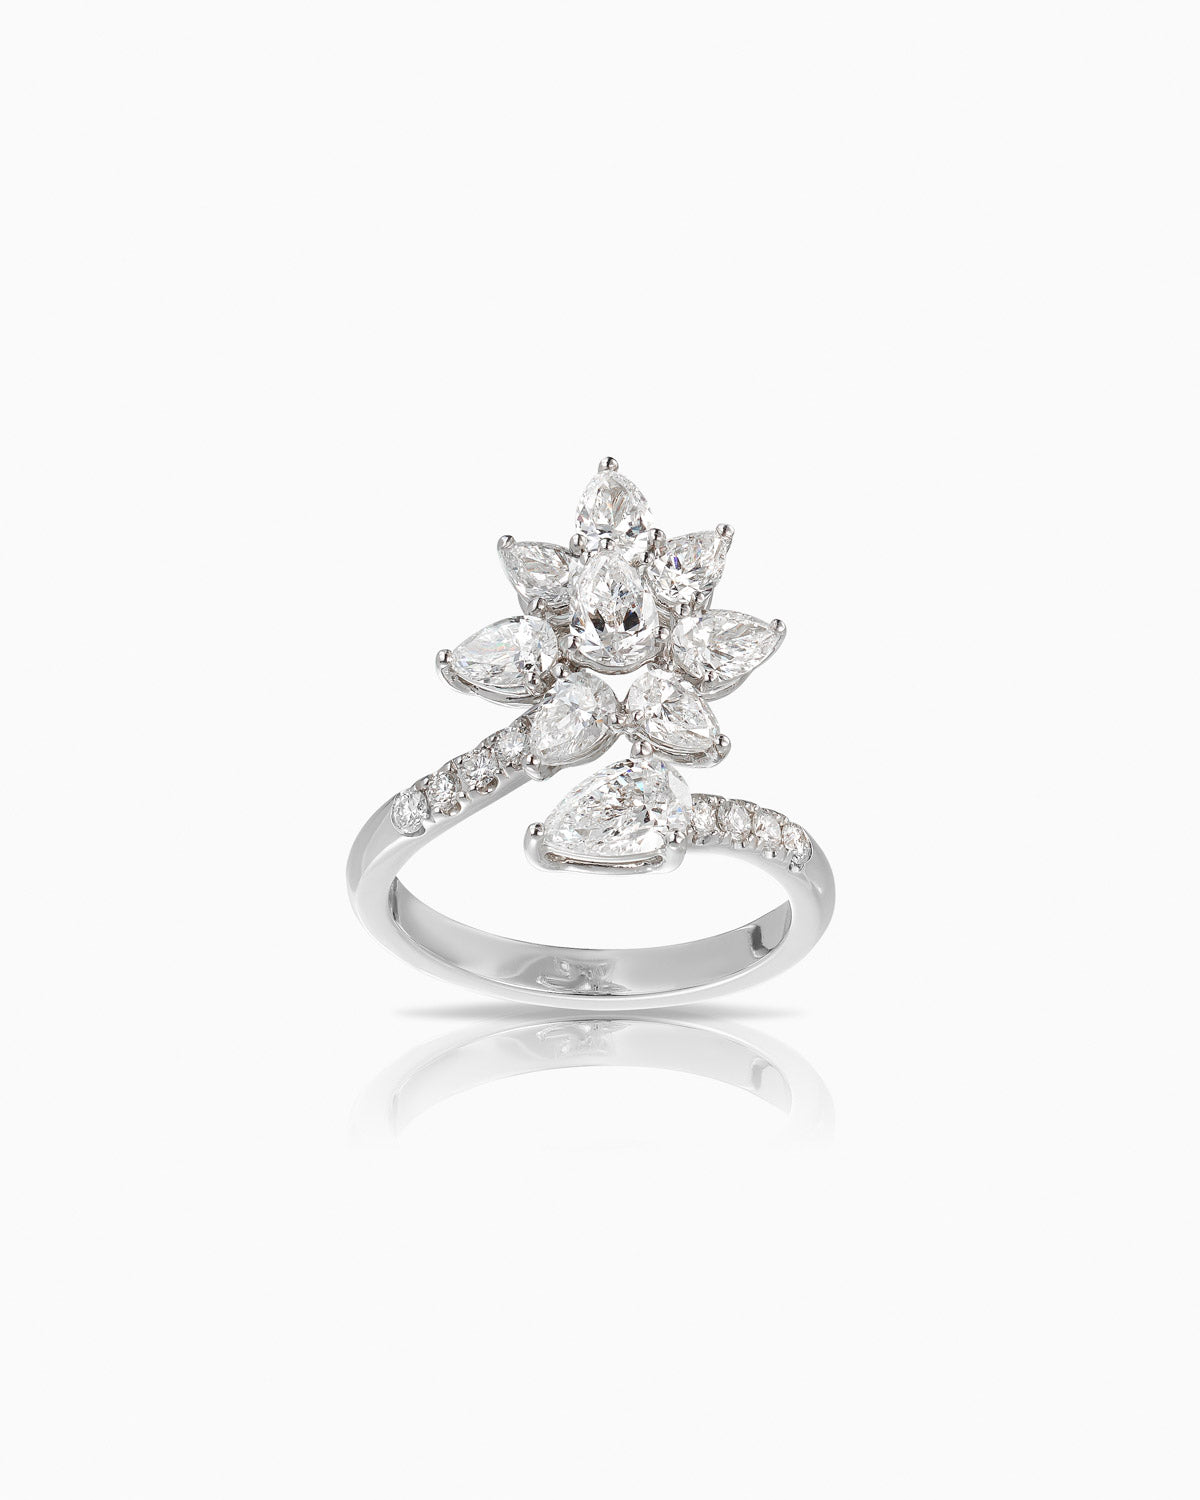 2.11ct glamour diamond ring featuring 9 x pear cut natural diamonds set in 18 karat white gold